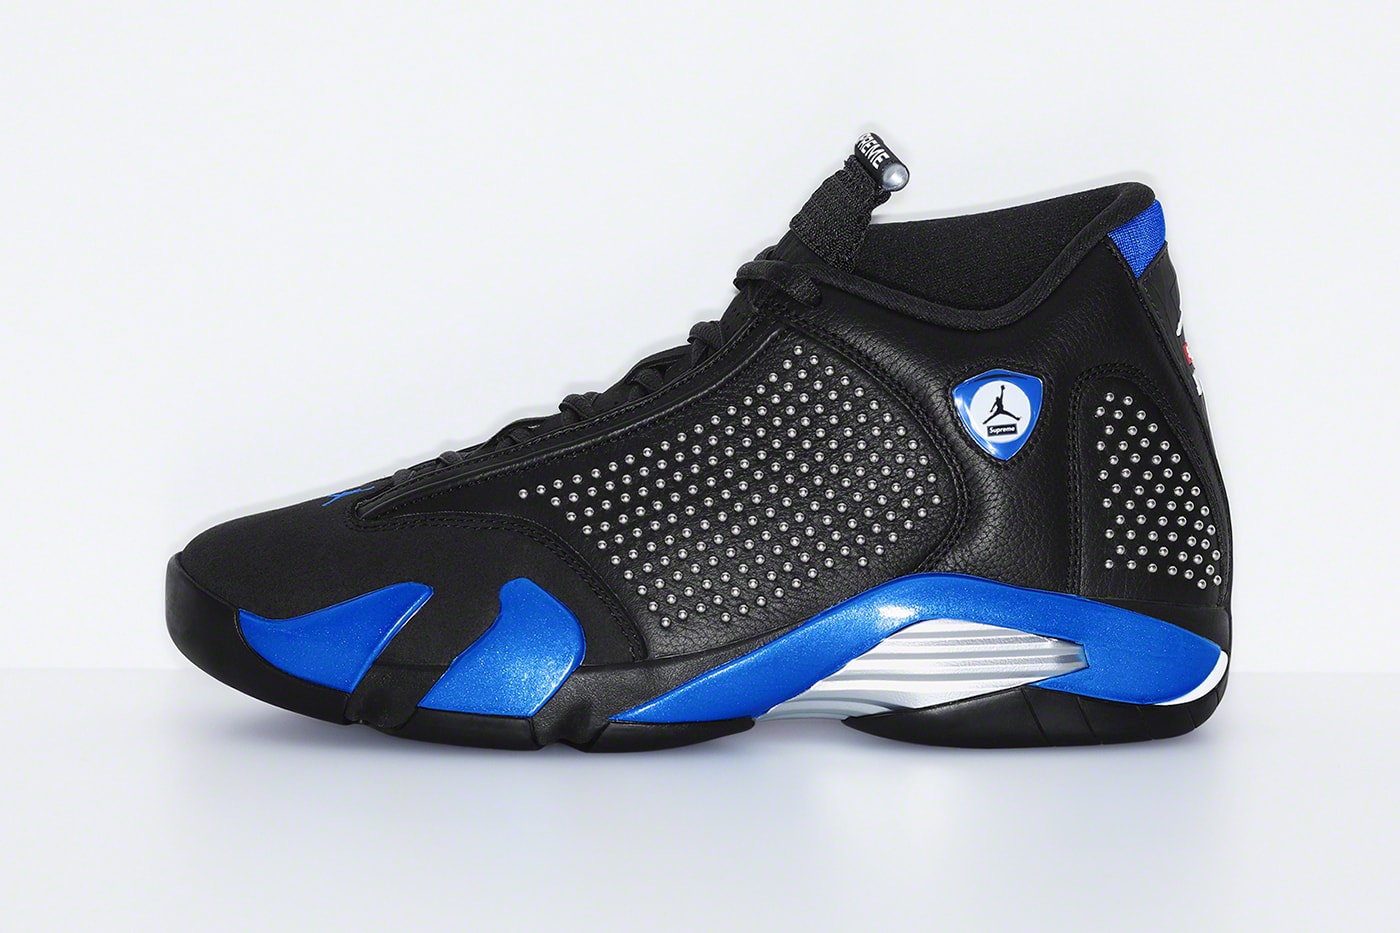 Supreme Air Jordan XIV 14 Official Look black blue White Michael Jordan Release Info Date Price